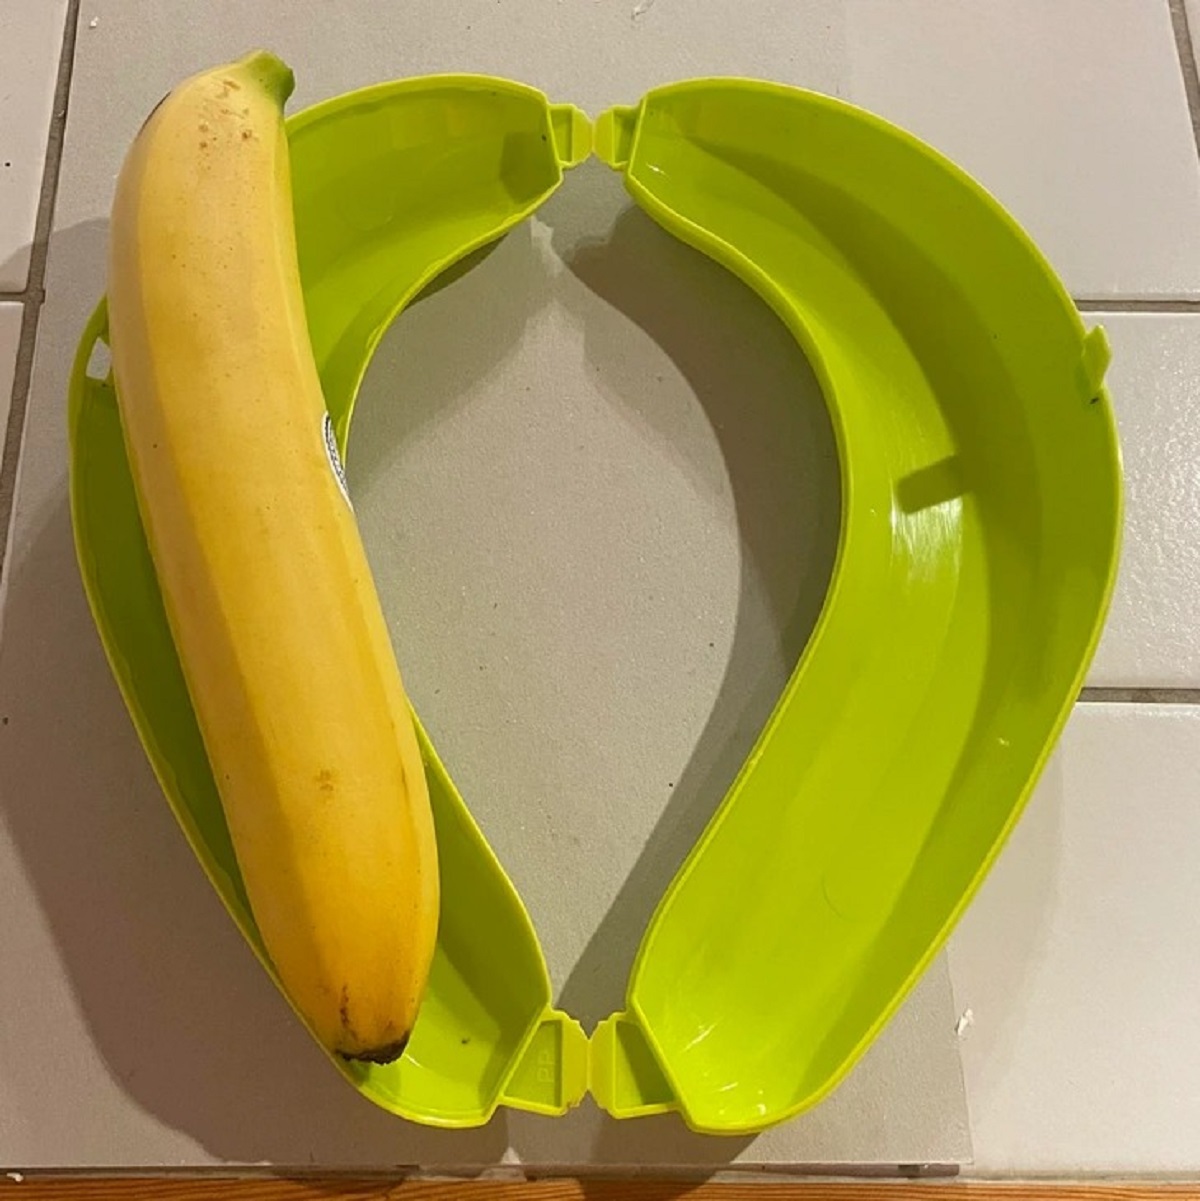 “This banana is so straight, it won’t fit into my banana box.”